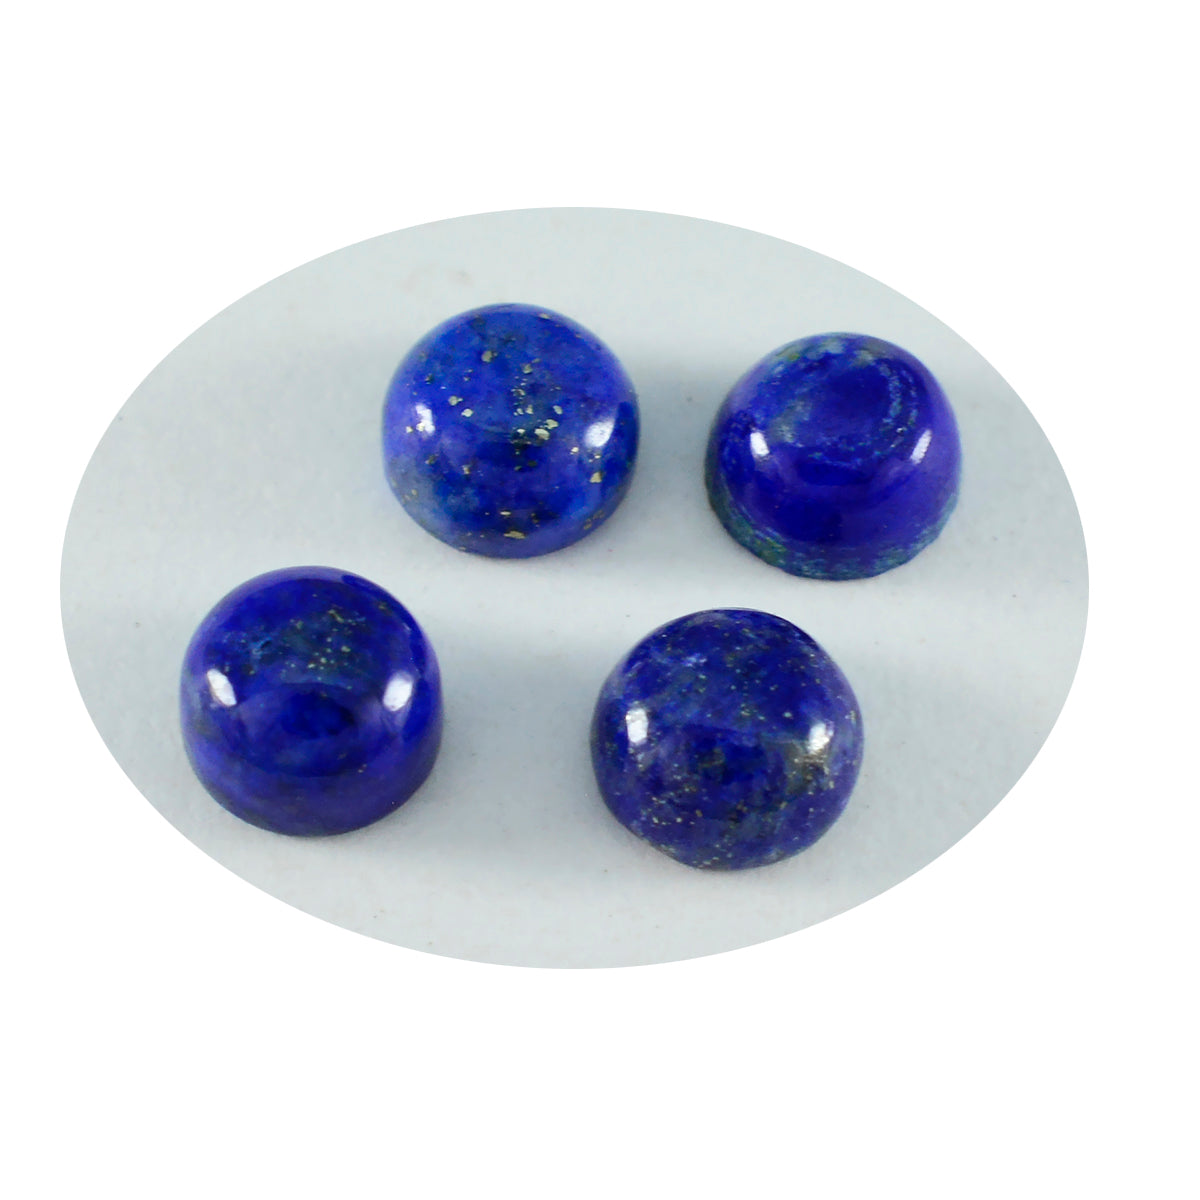 Riyogems 1PC Blue Lapis Lazuli Cabochon 6x6 mm Round Shape nice-looking Quality Loose Gems